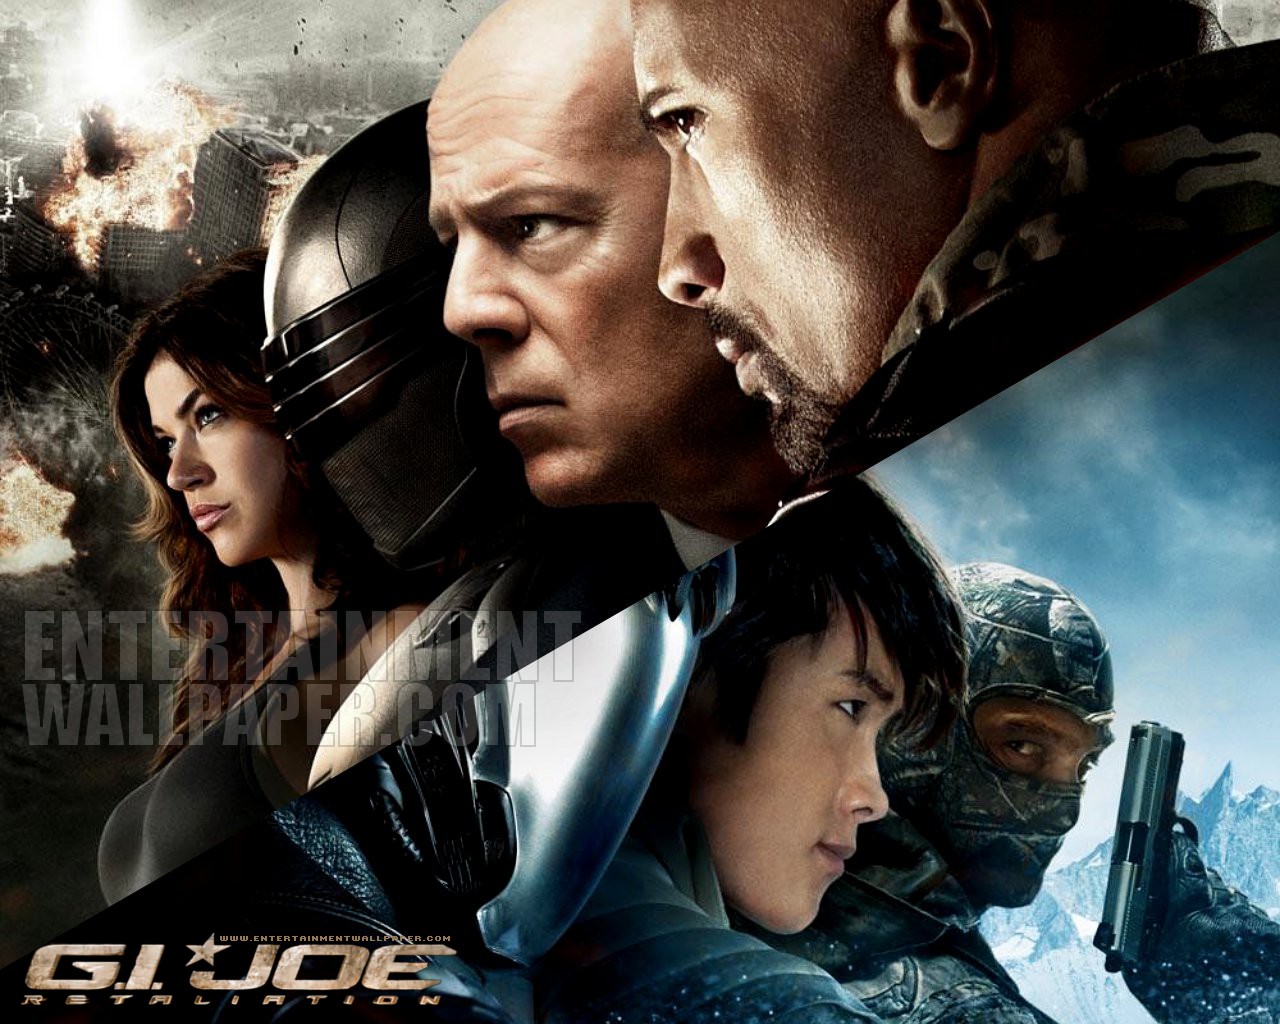 G.I Joe : Retaliation [2013] - Upcoming Movies Wallpaper (33873940) - Fanpop1280 x 1024